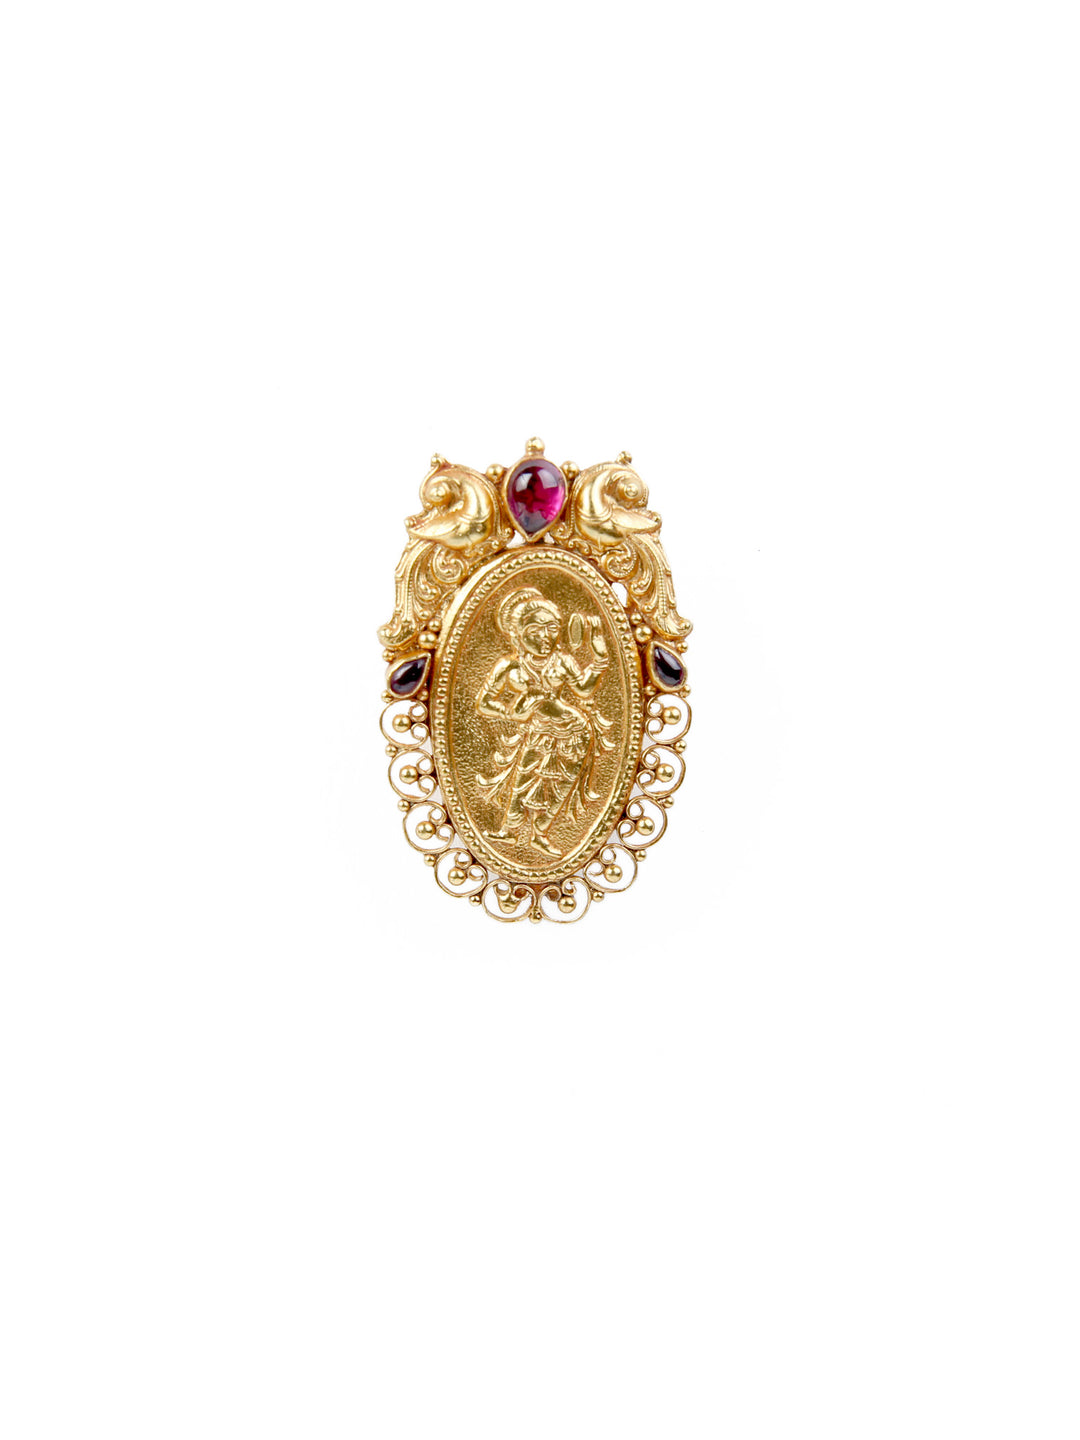 925 silver “Darpana” - mirror lady pendant